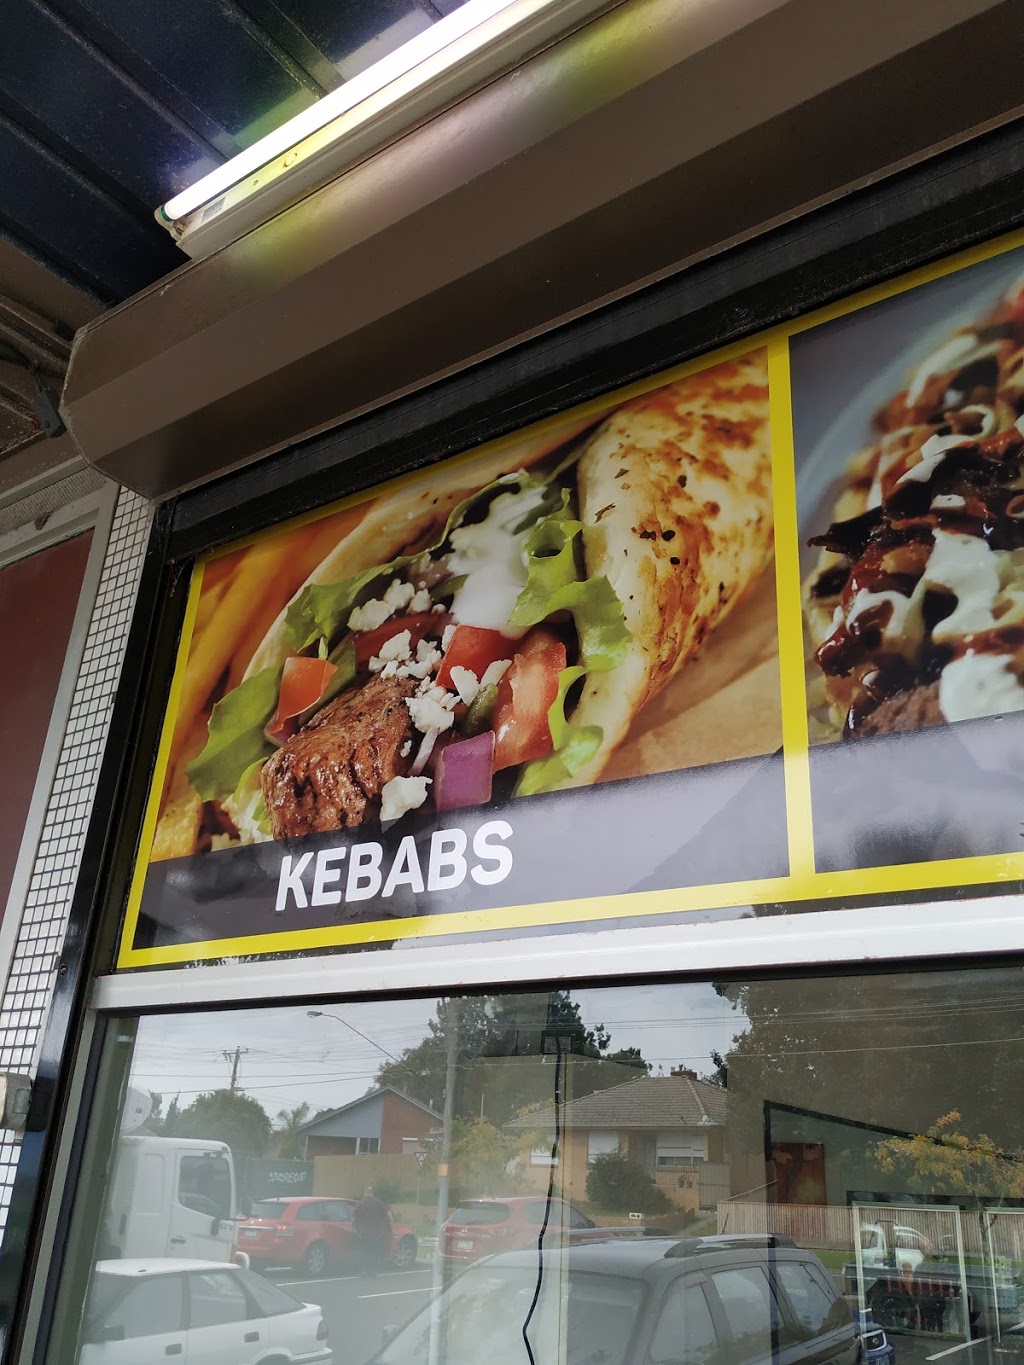 Mitchs Kebab & Café | meal takeaway | 53 Excelsior Dr, Frankston North VIC 3200, Australia